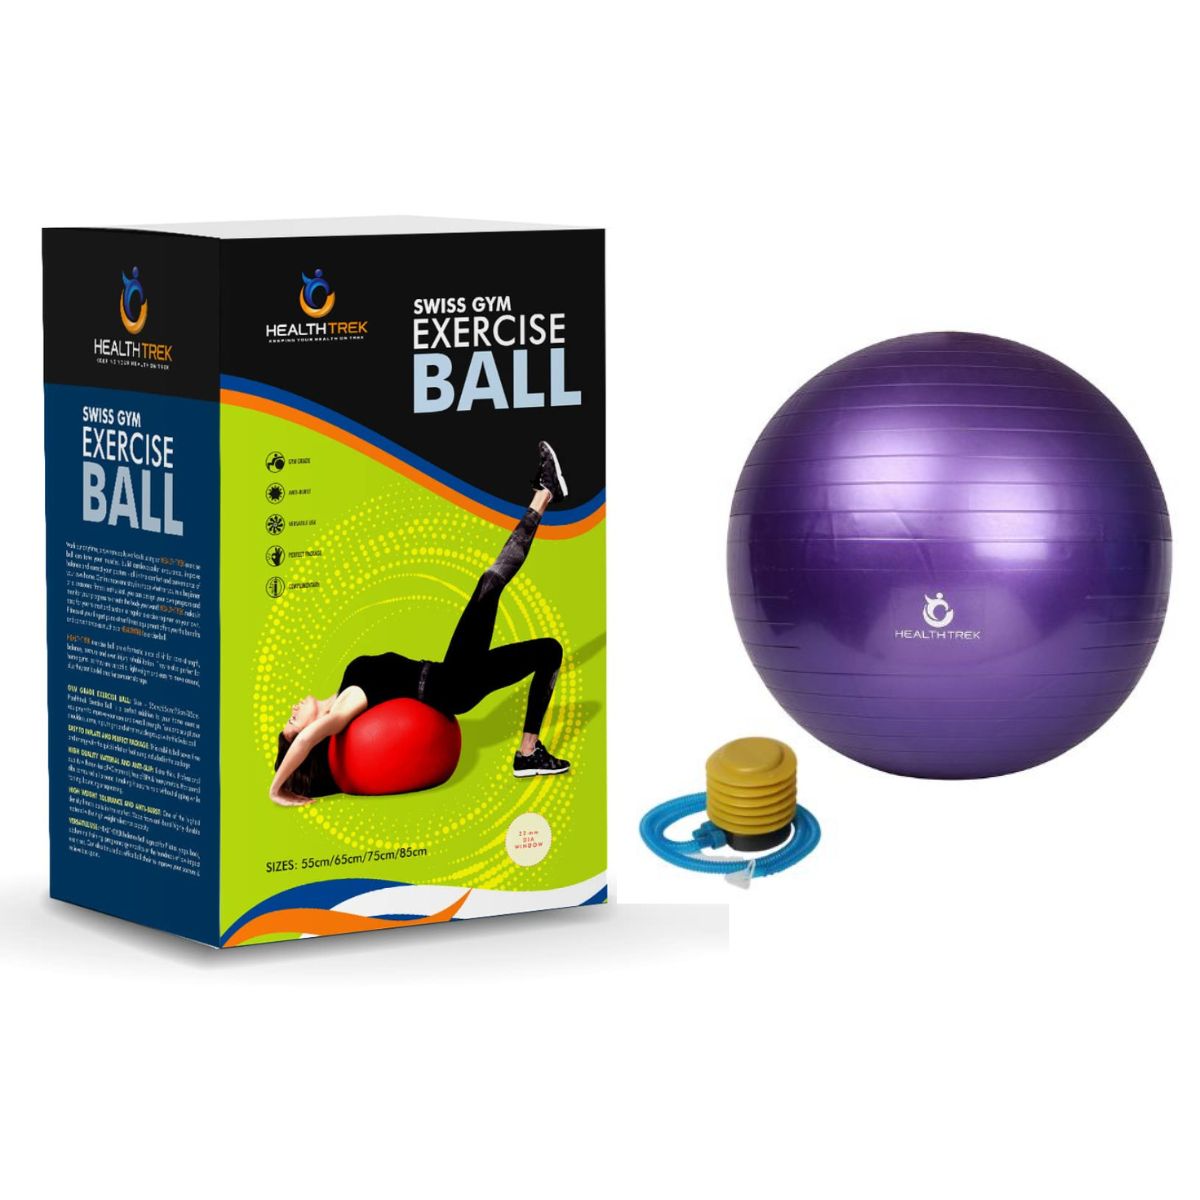 Healthtrek Swiss Gym And Exercise Ball